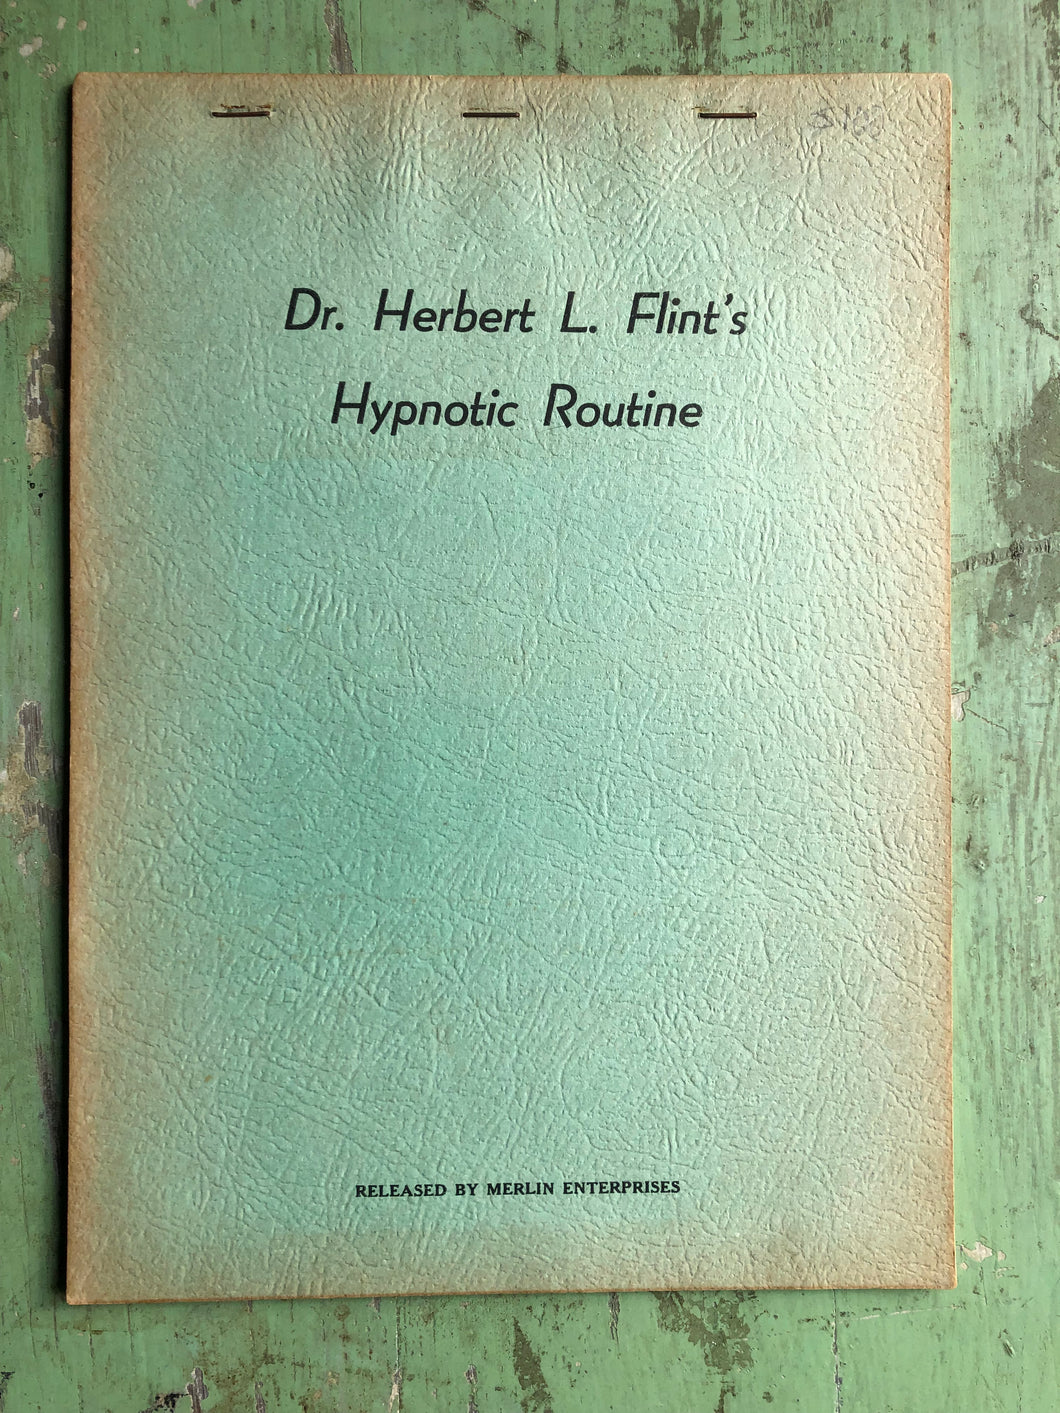 Dr. Herbert L. Flint’s Hypnotic Routine by Dr. Herbert L. Flint